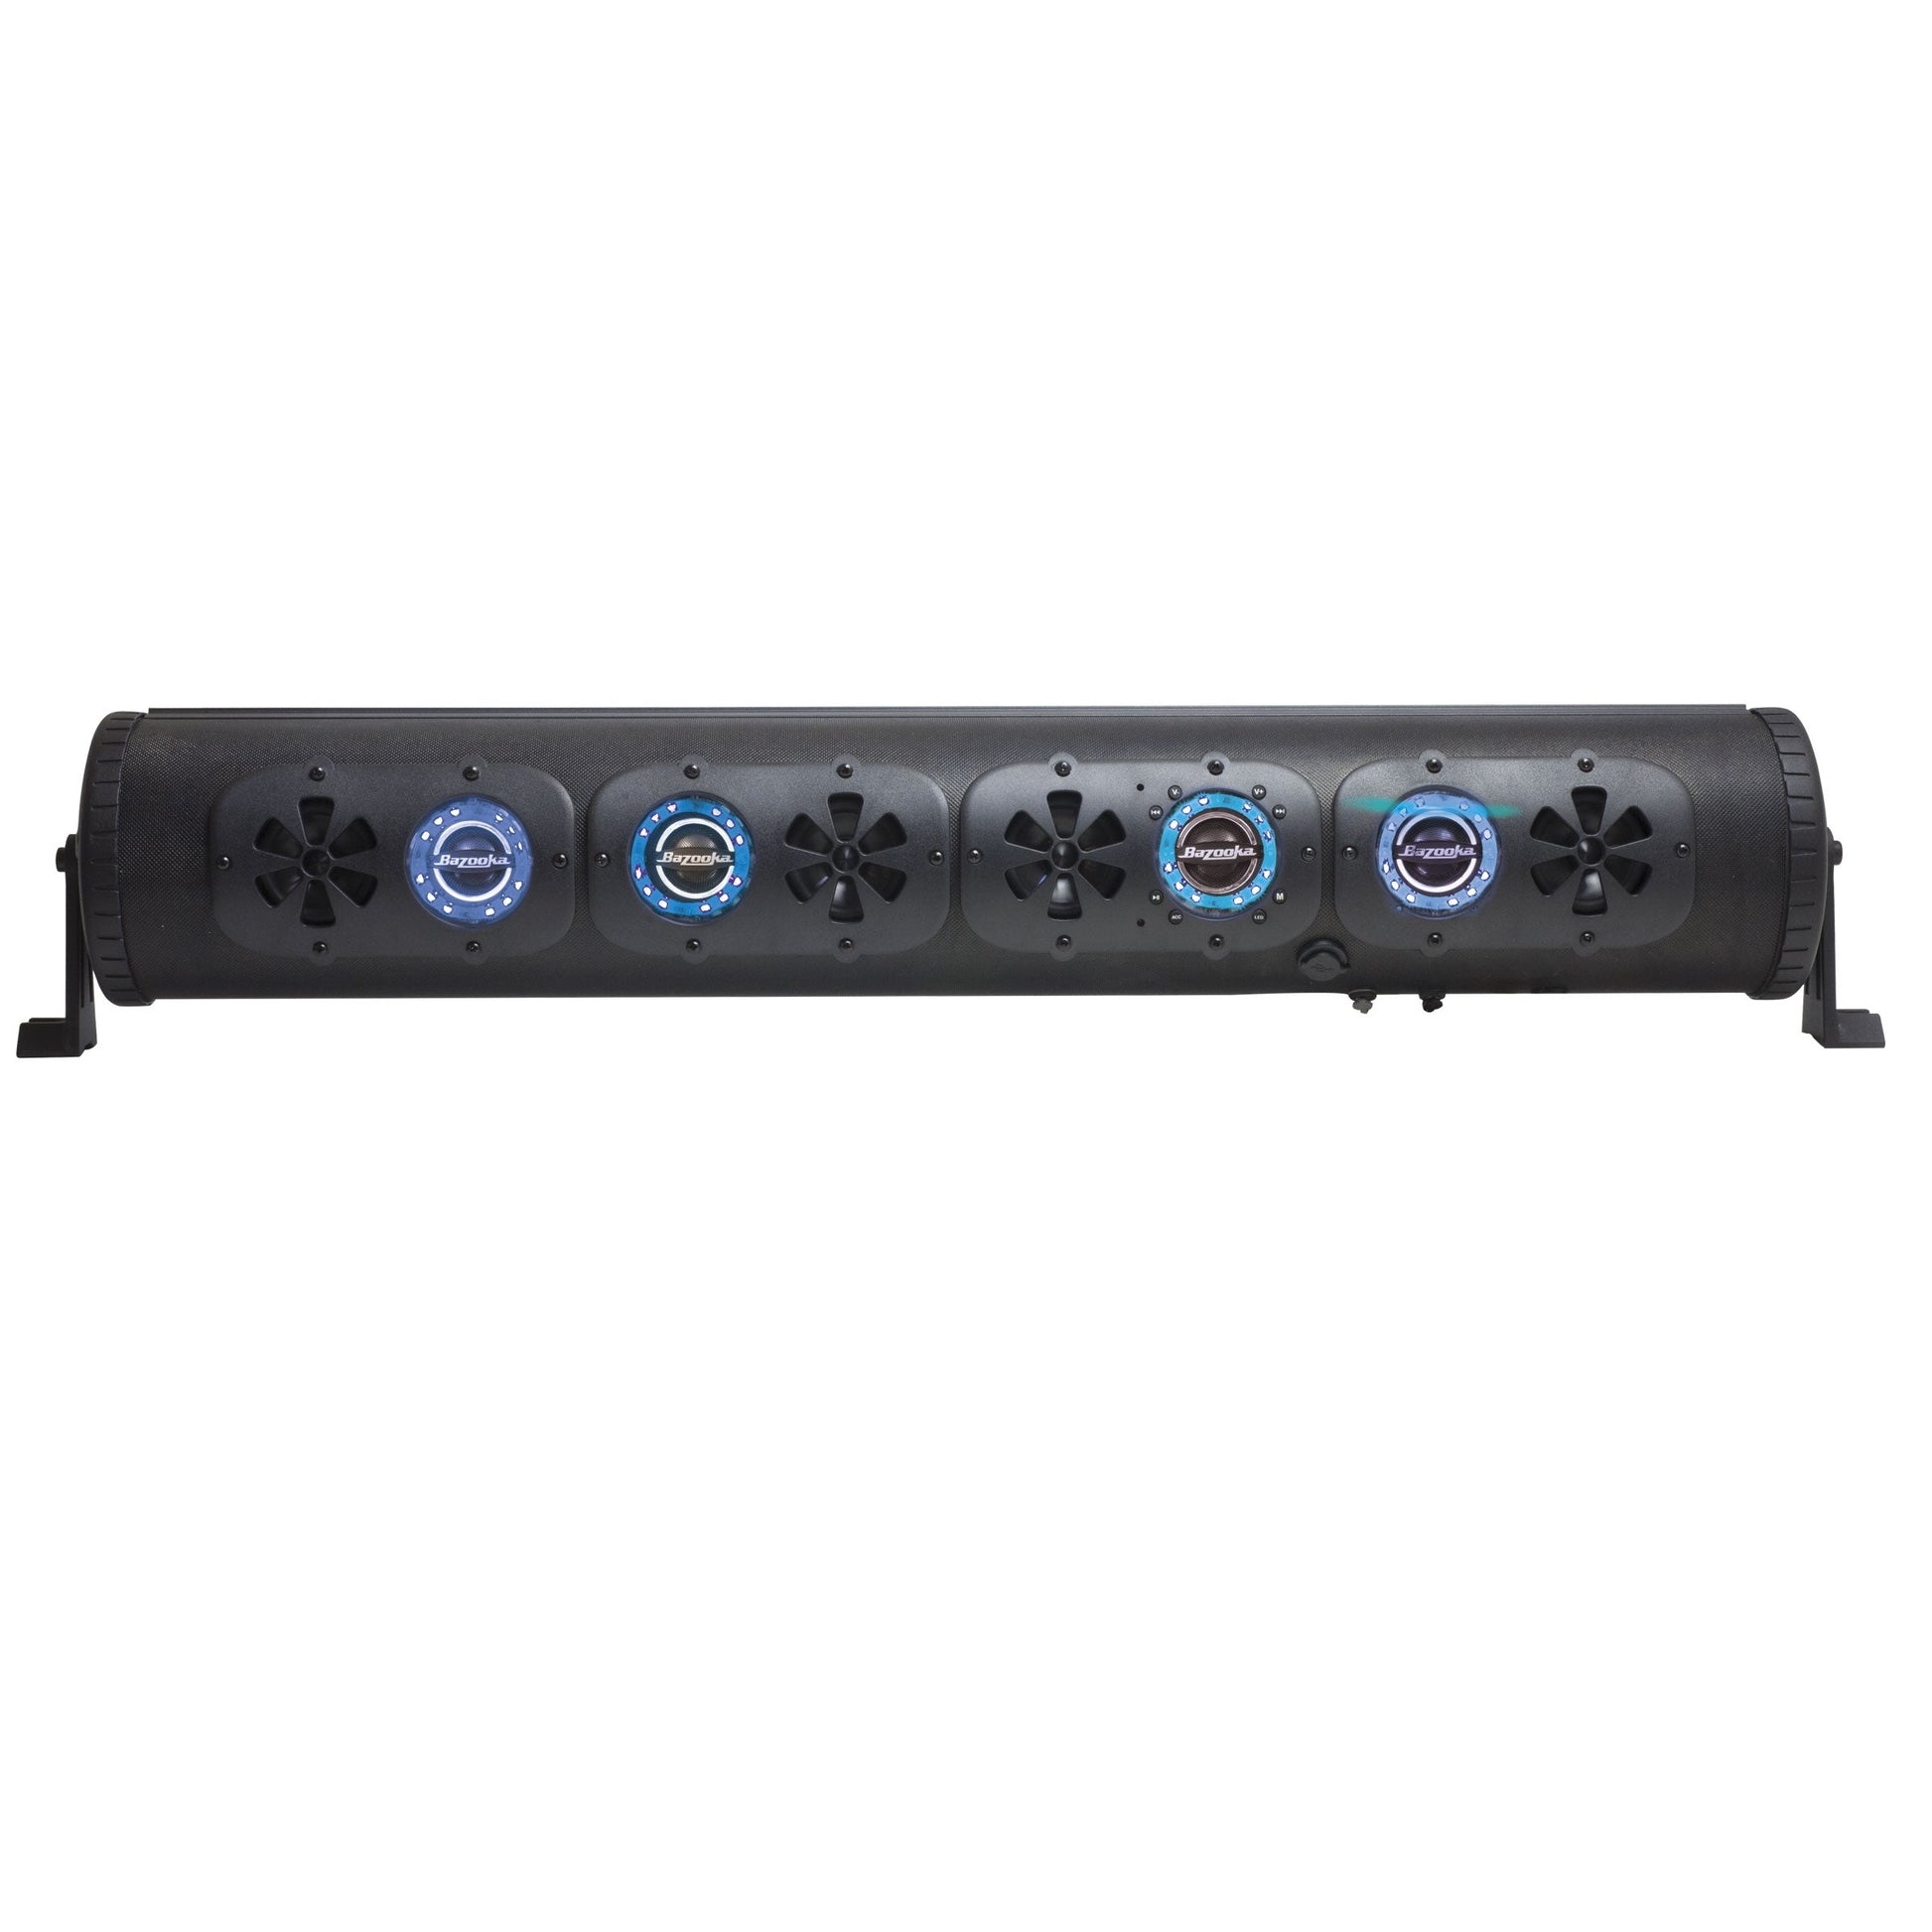 G2 Party Bar & LED Illumination System (Open Box Item)